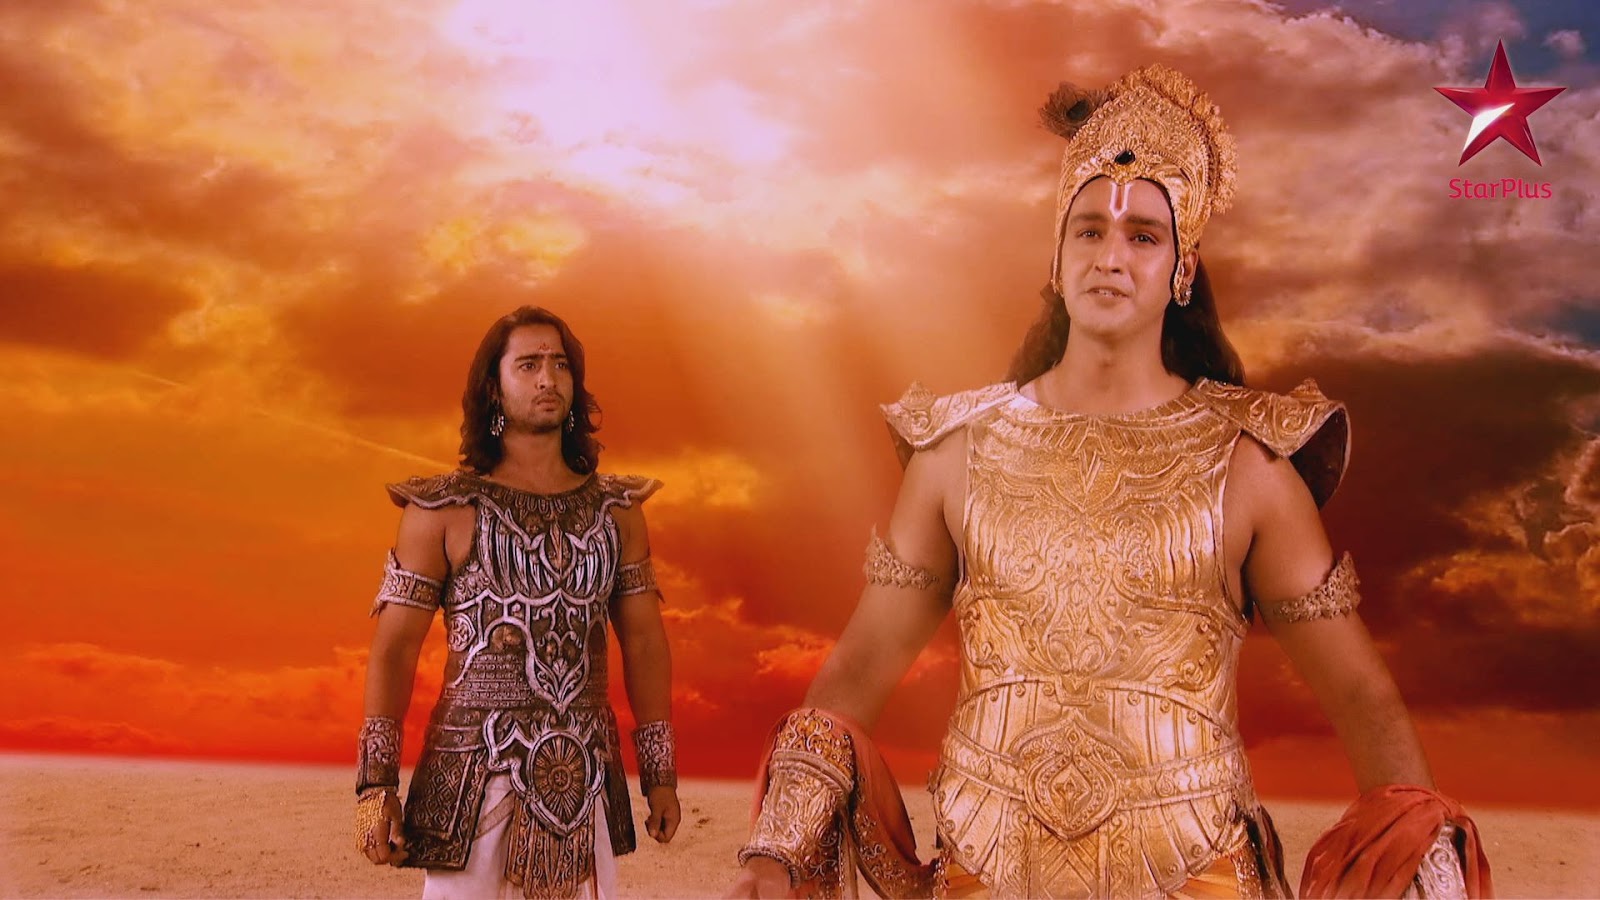 Mahabharat star plus full episodes download kickass